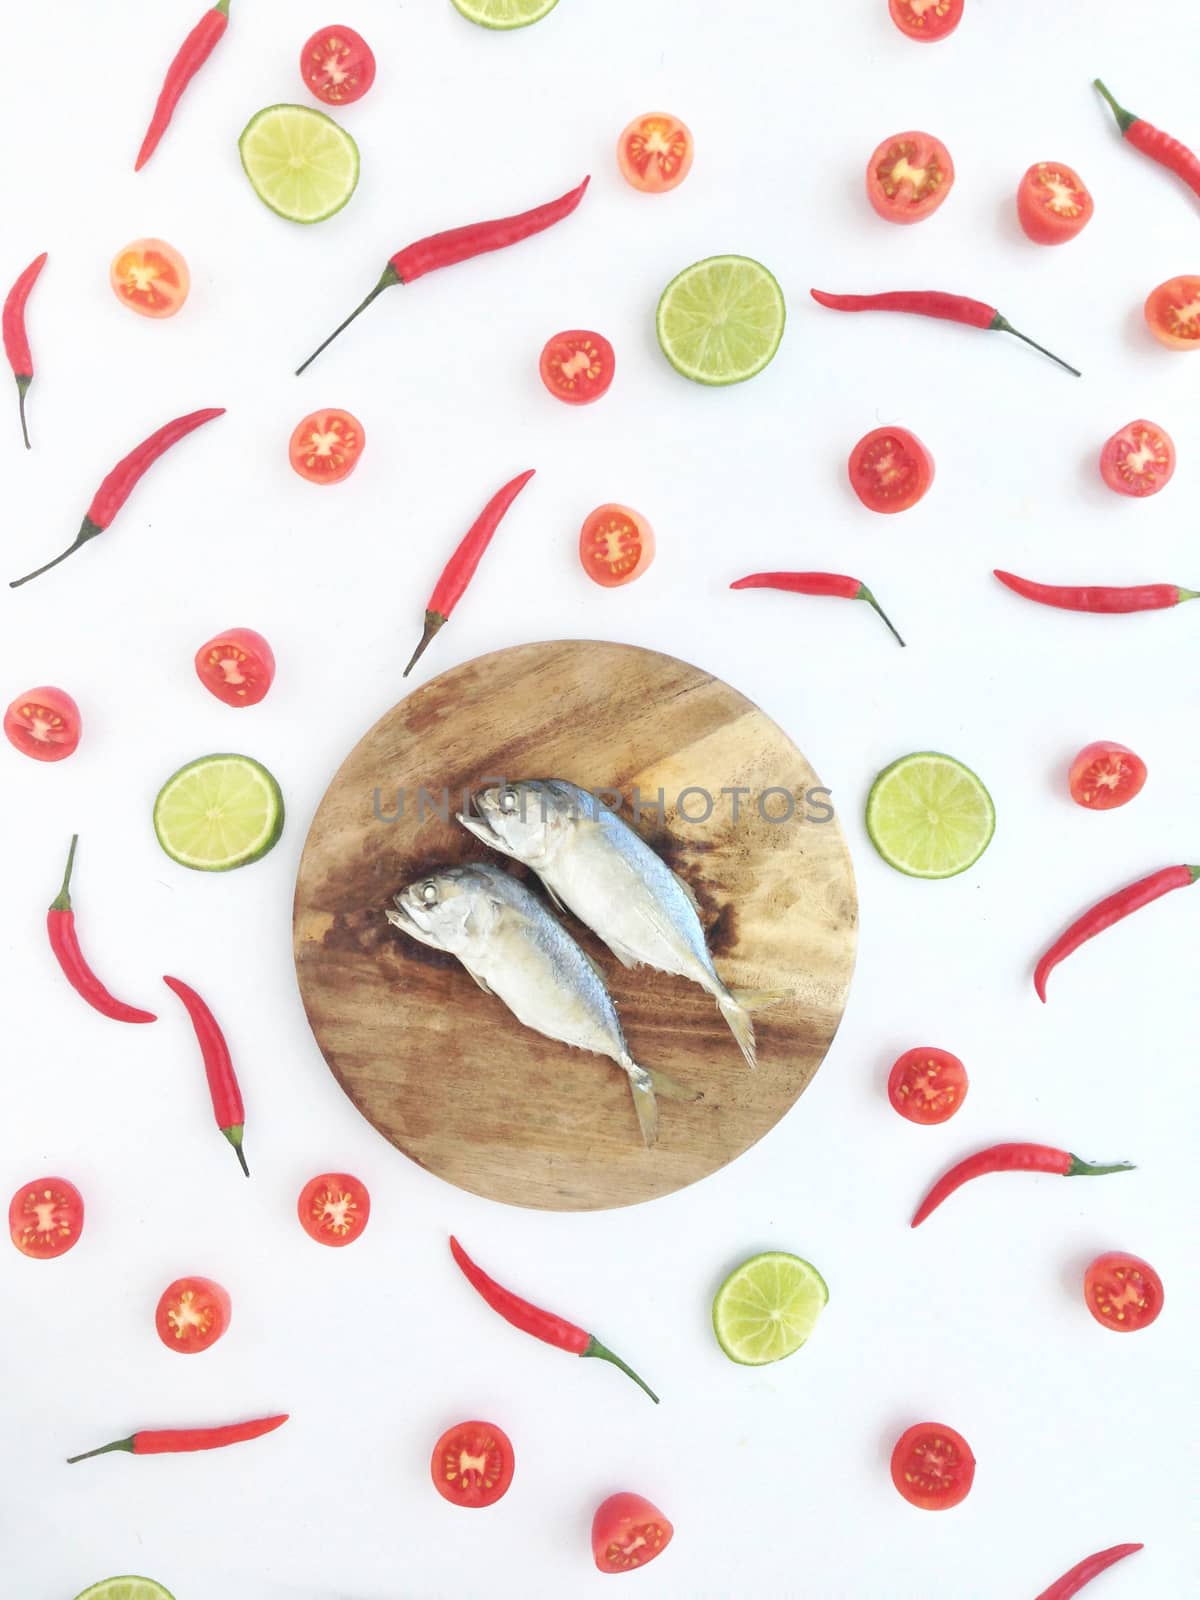 short mackerel among lime chili and tomato